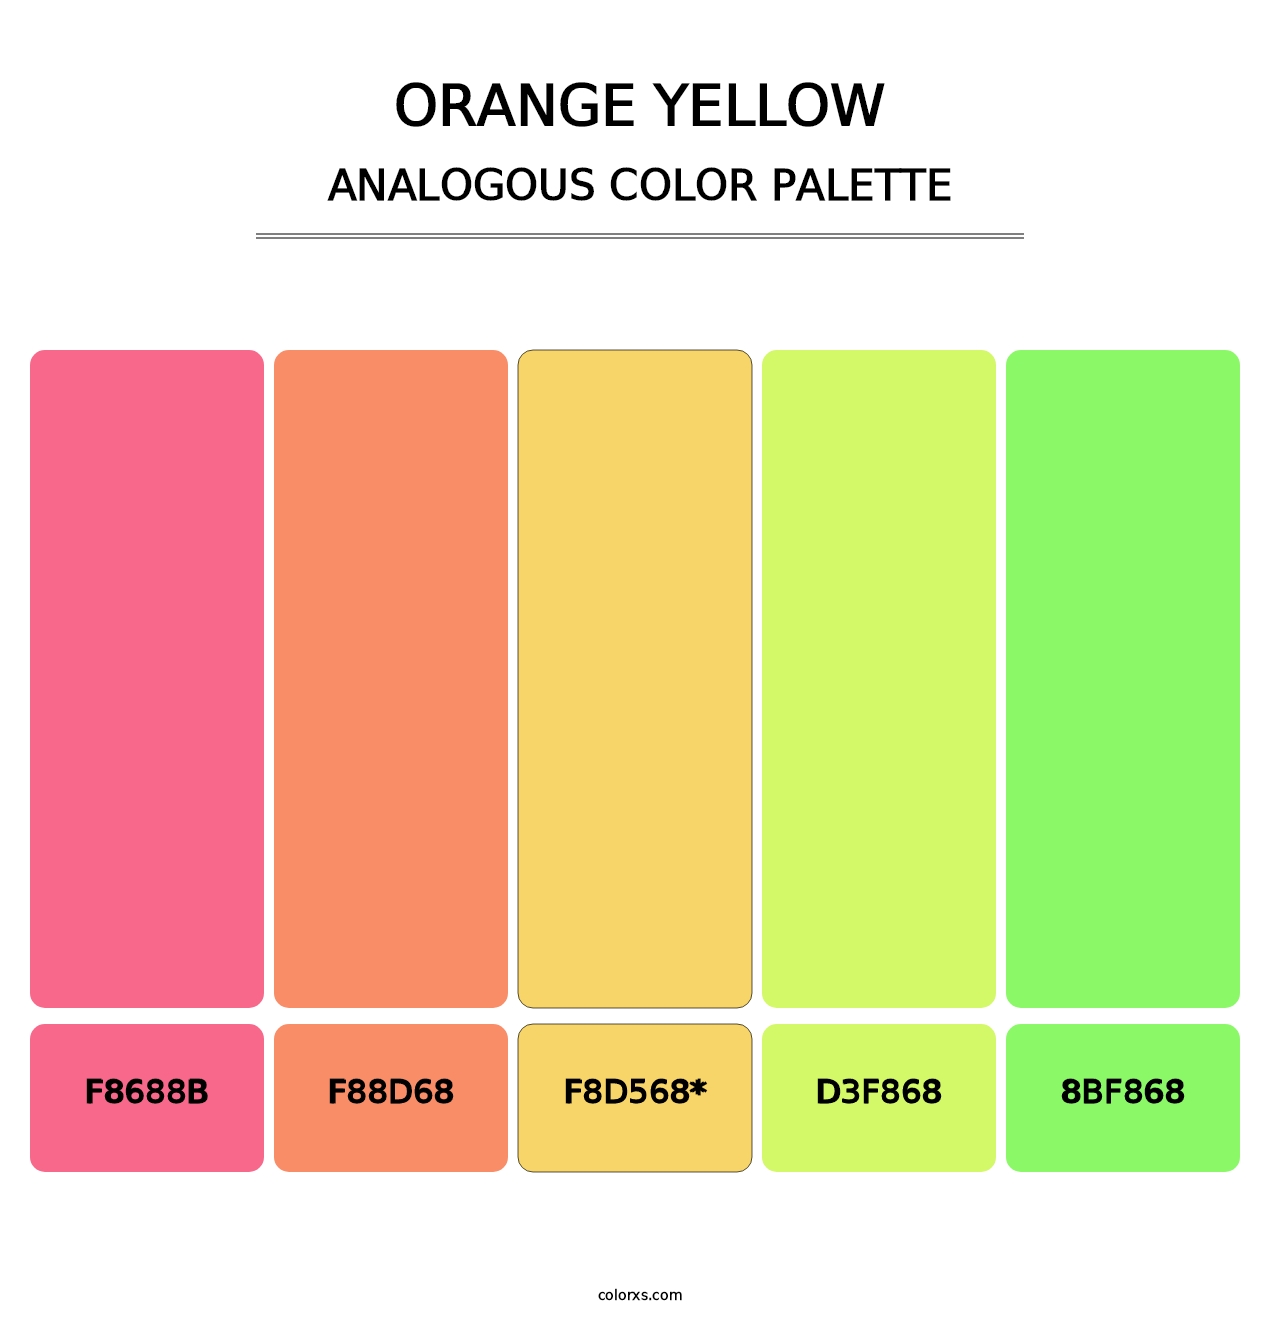 Orange Yellow - Analogous Color Palette